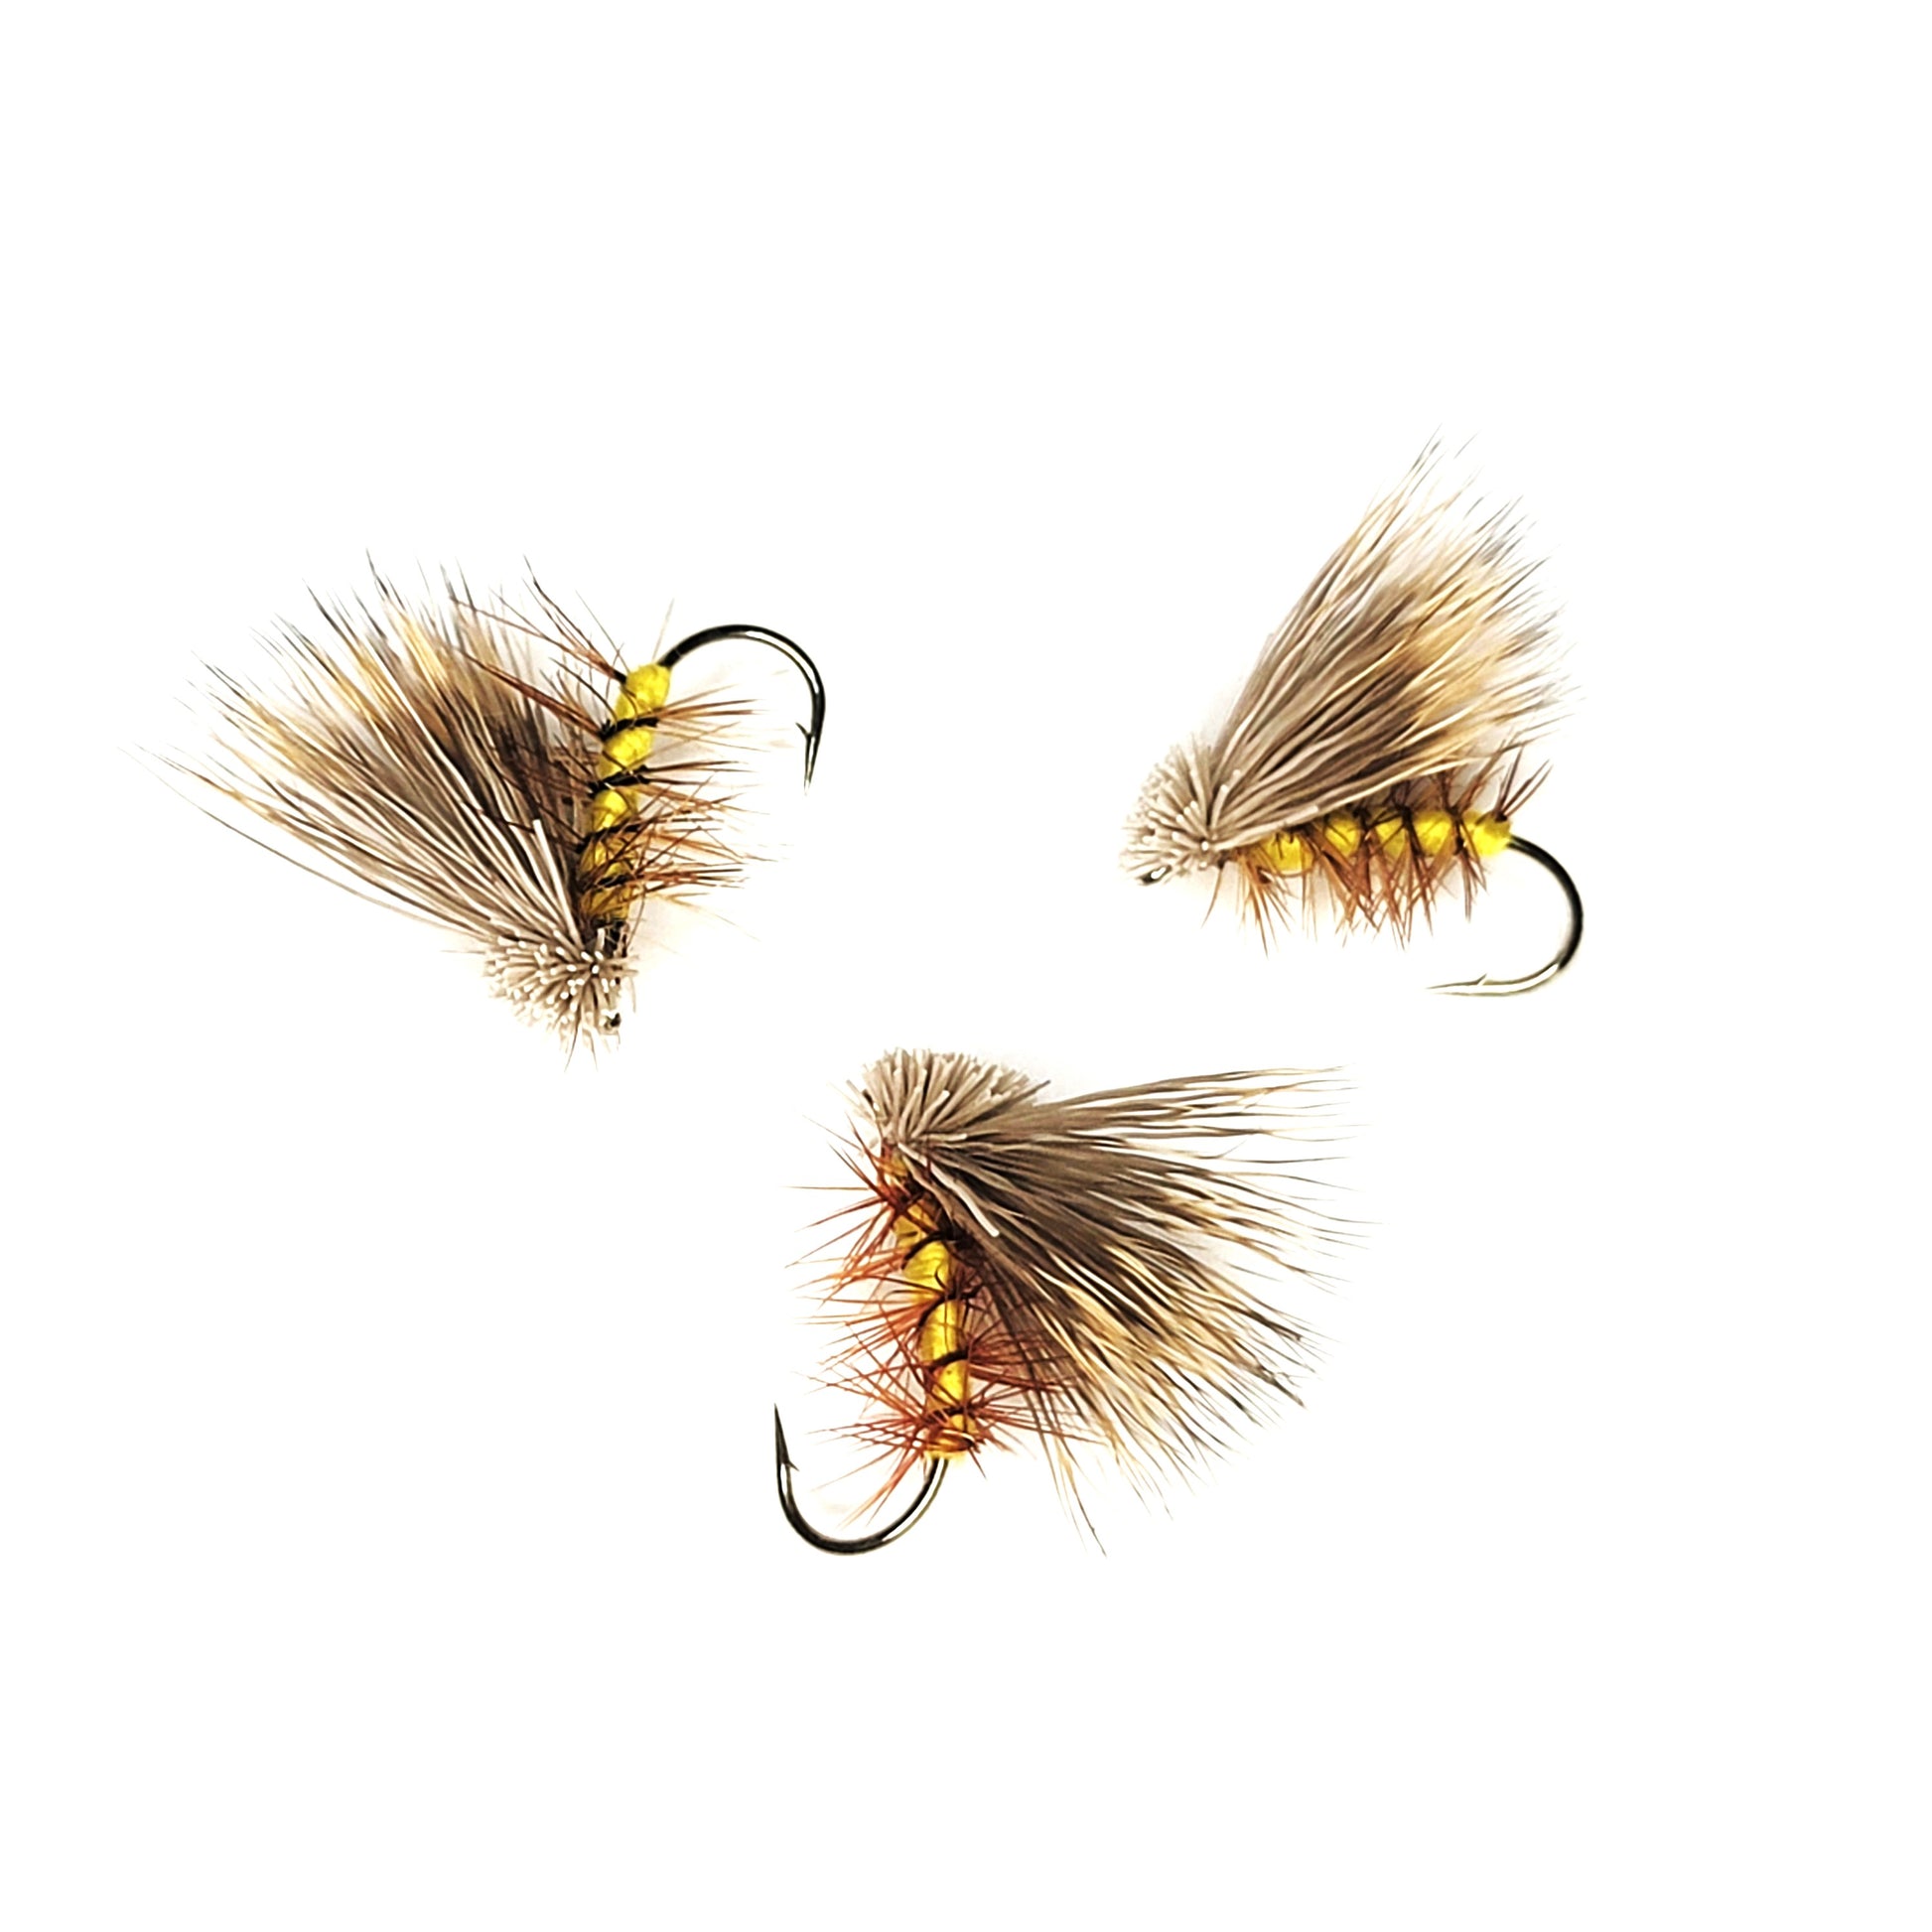 Trout Fly Fishing Flies Elk Hair Caddis Tan 6 Flies Hook Size 16 - Dry Fly